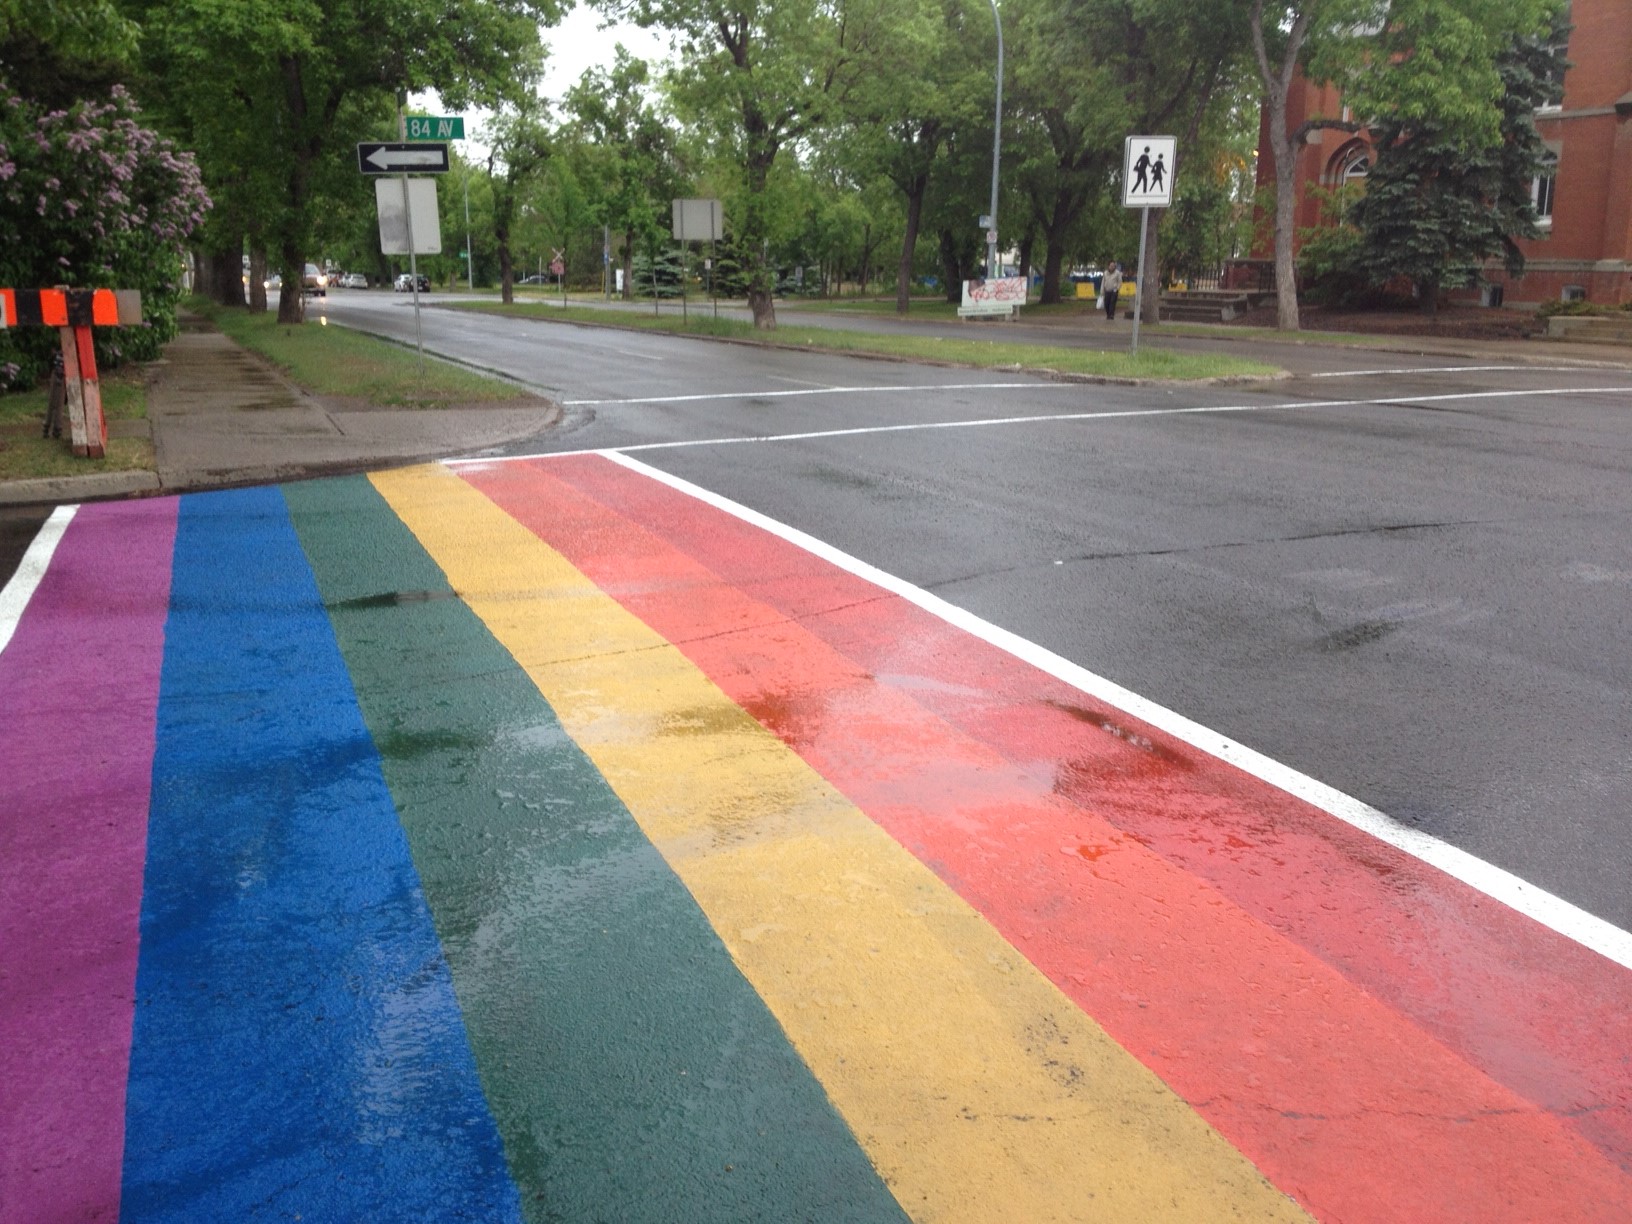 Rainbow crosswalks 104 St and 84 Ave (looking north)